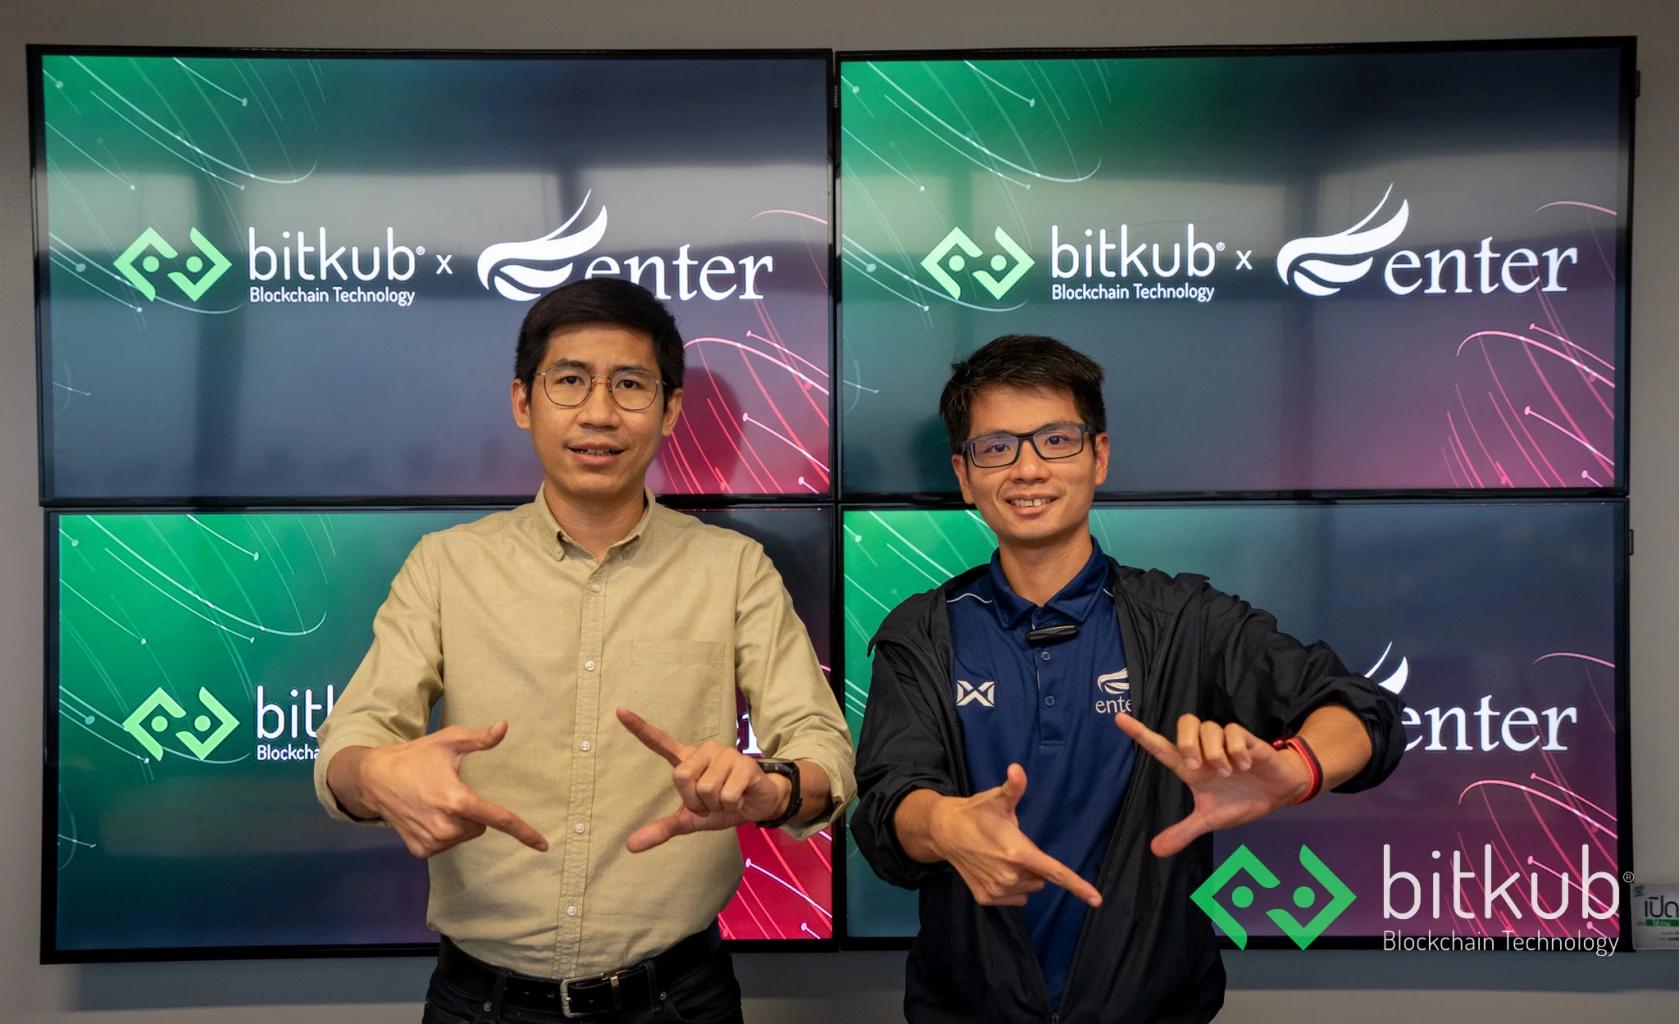 Bitkub and Enter Corporation to develop blockchain technology as strategic partners to strengthen Bitkub Chain